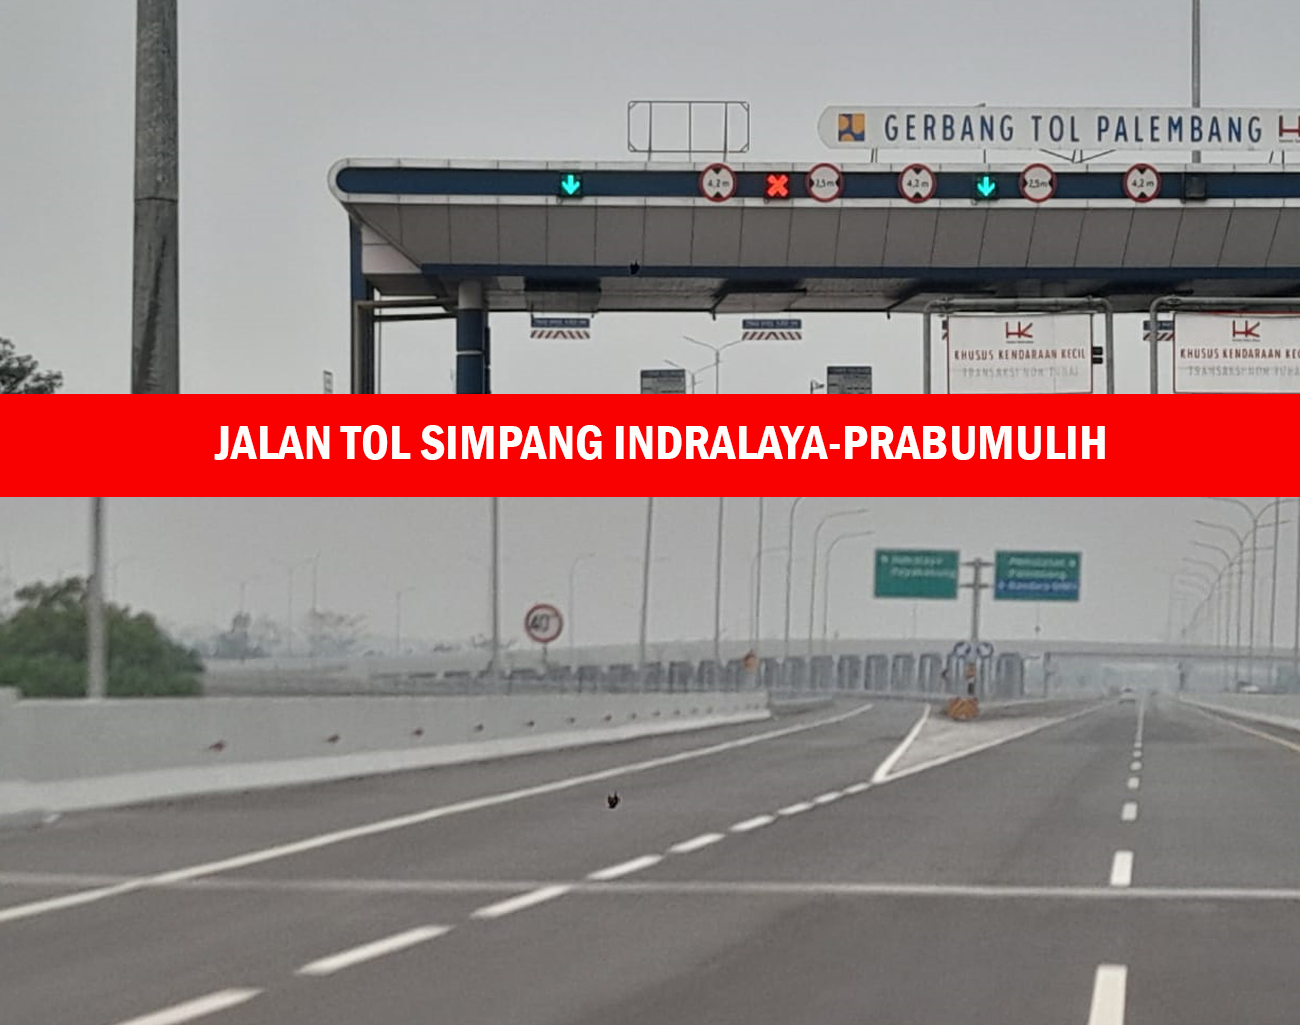 Realisasi Konstruksi dan Pembebasan Lahan Pembangunan Jalan Tol Simpang Indralaya-Prabumulih 100 Persen